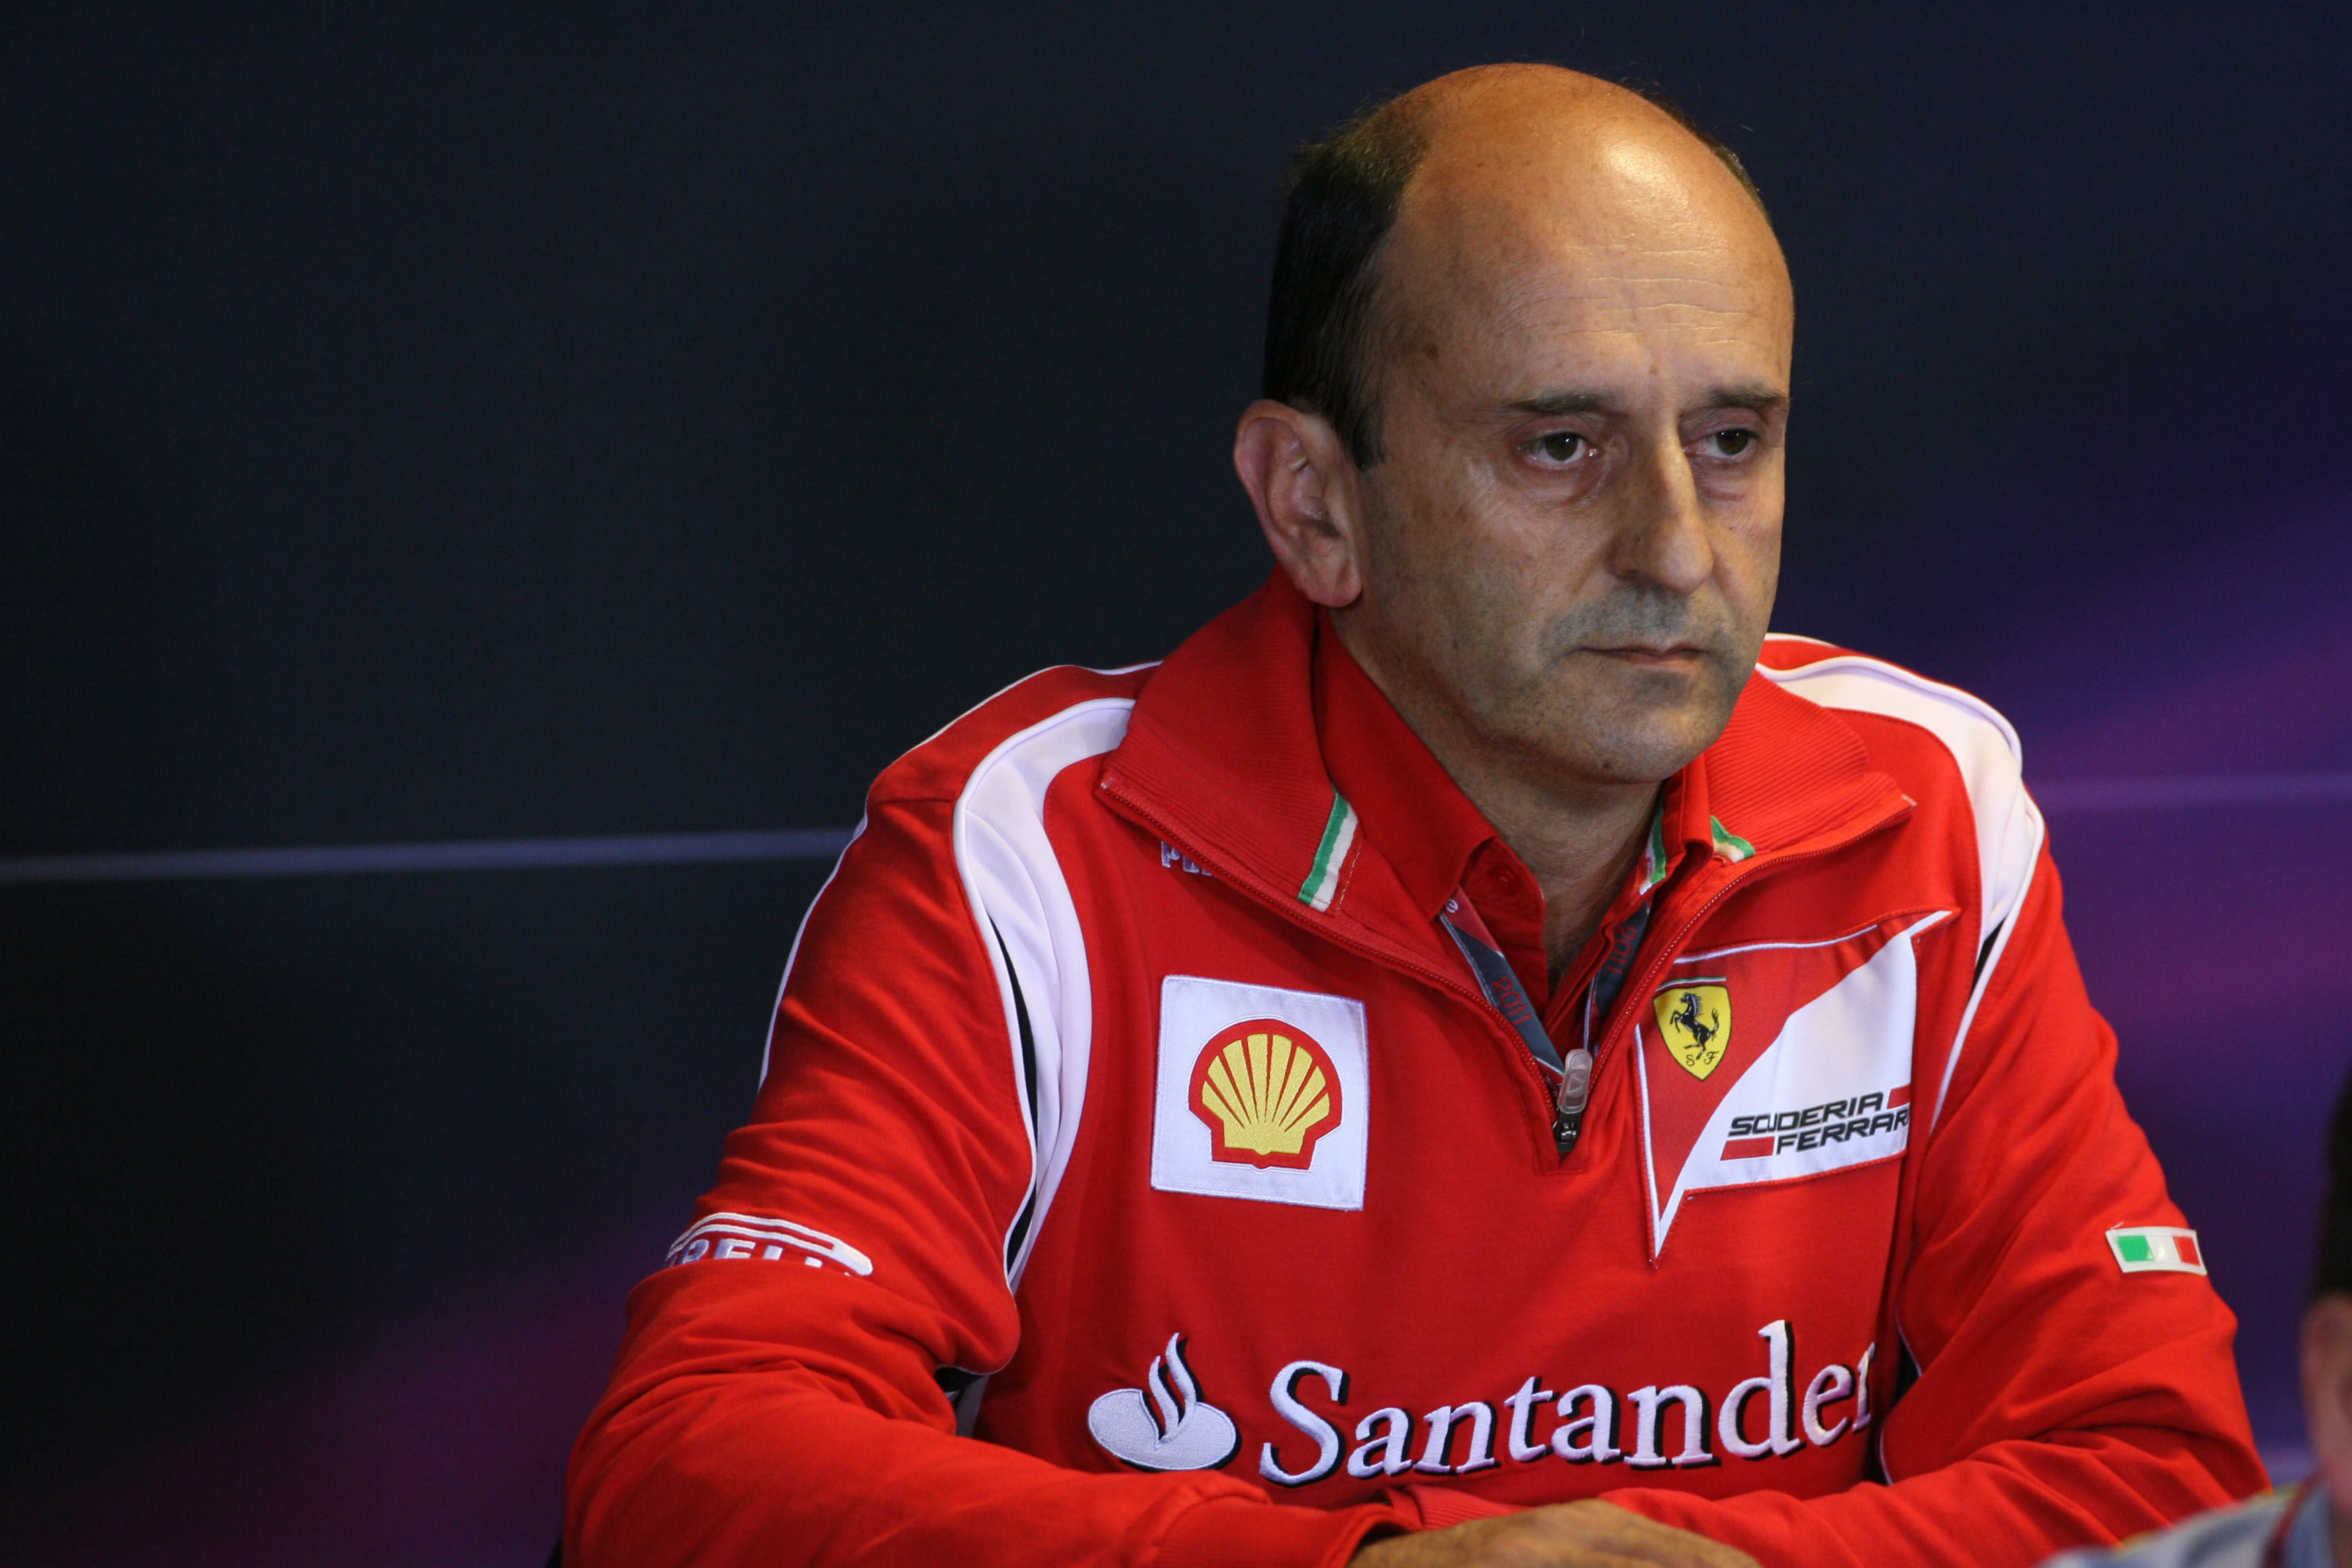 Ferrari zet motorchef aan de kant